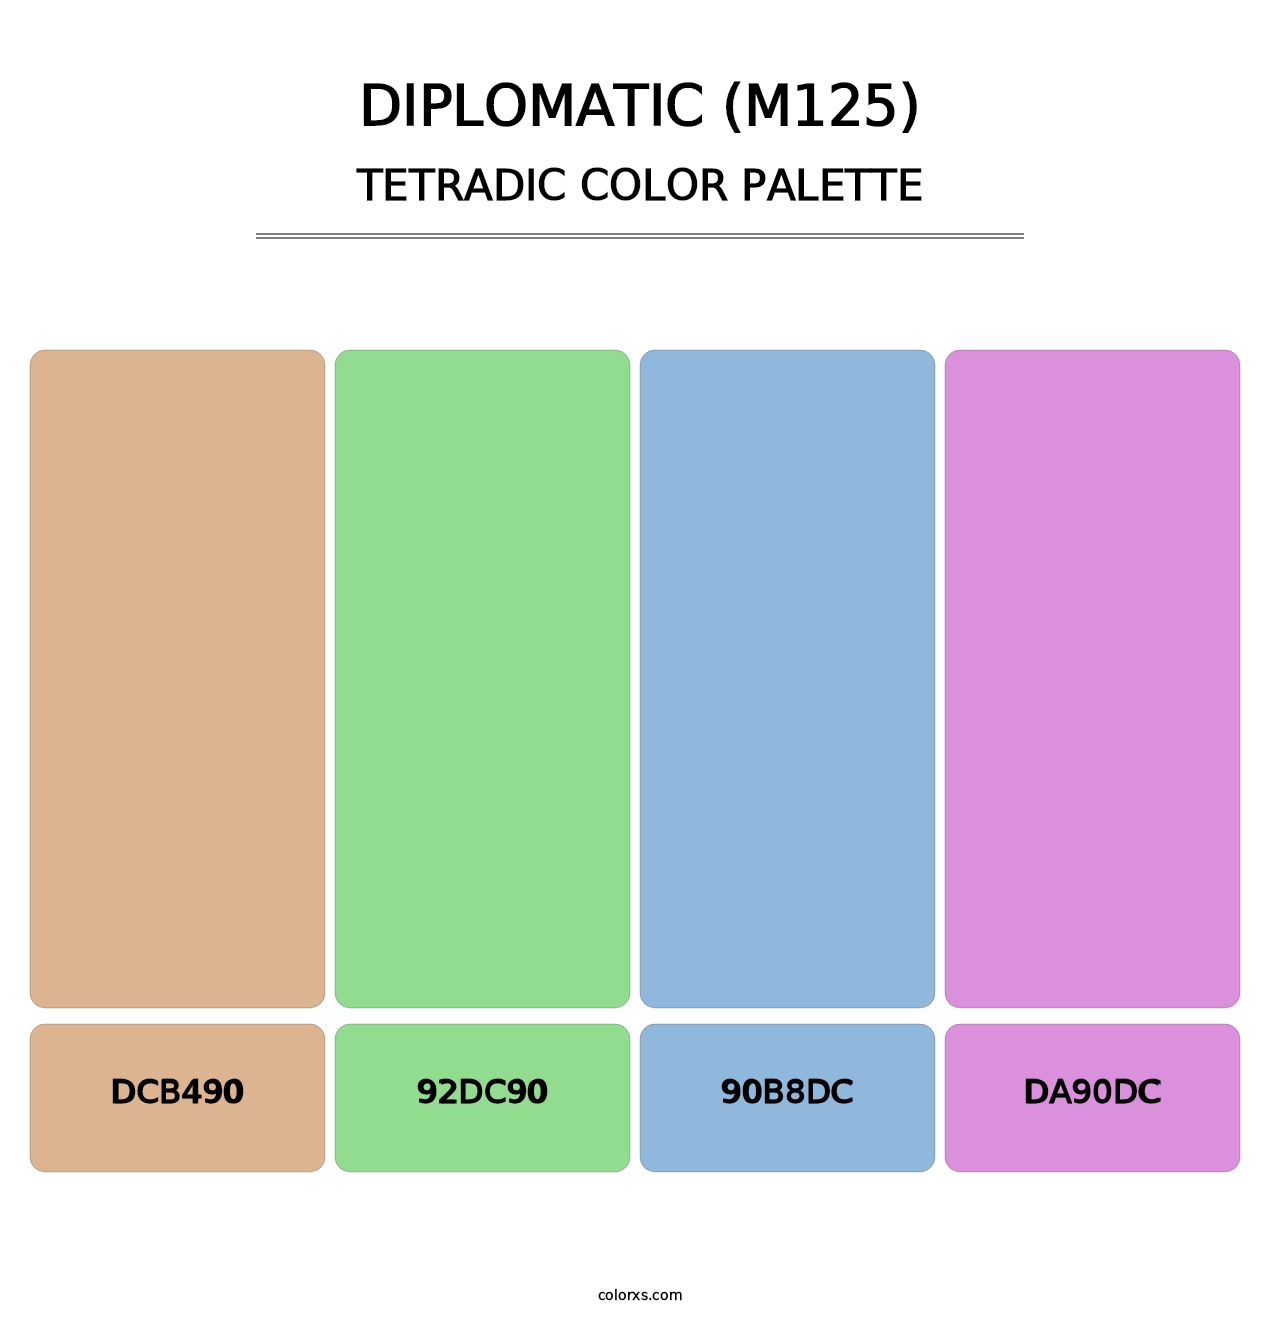 Diplomatic (M125) - Tetradic Color Palette